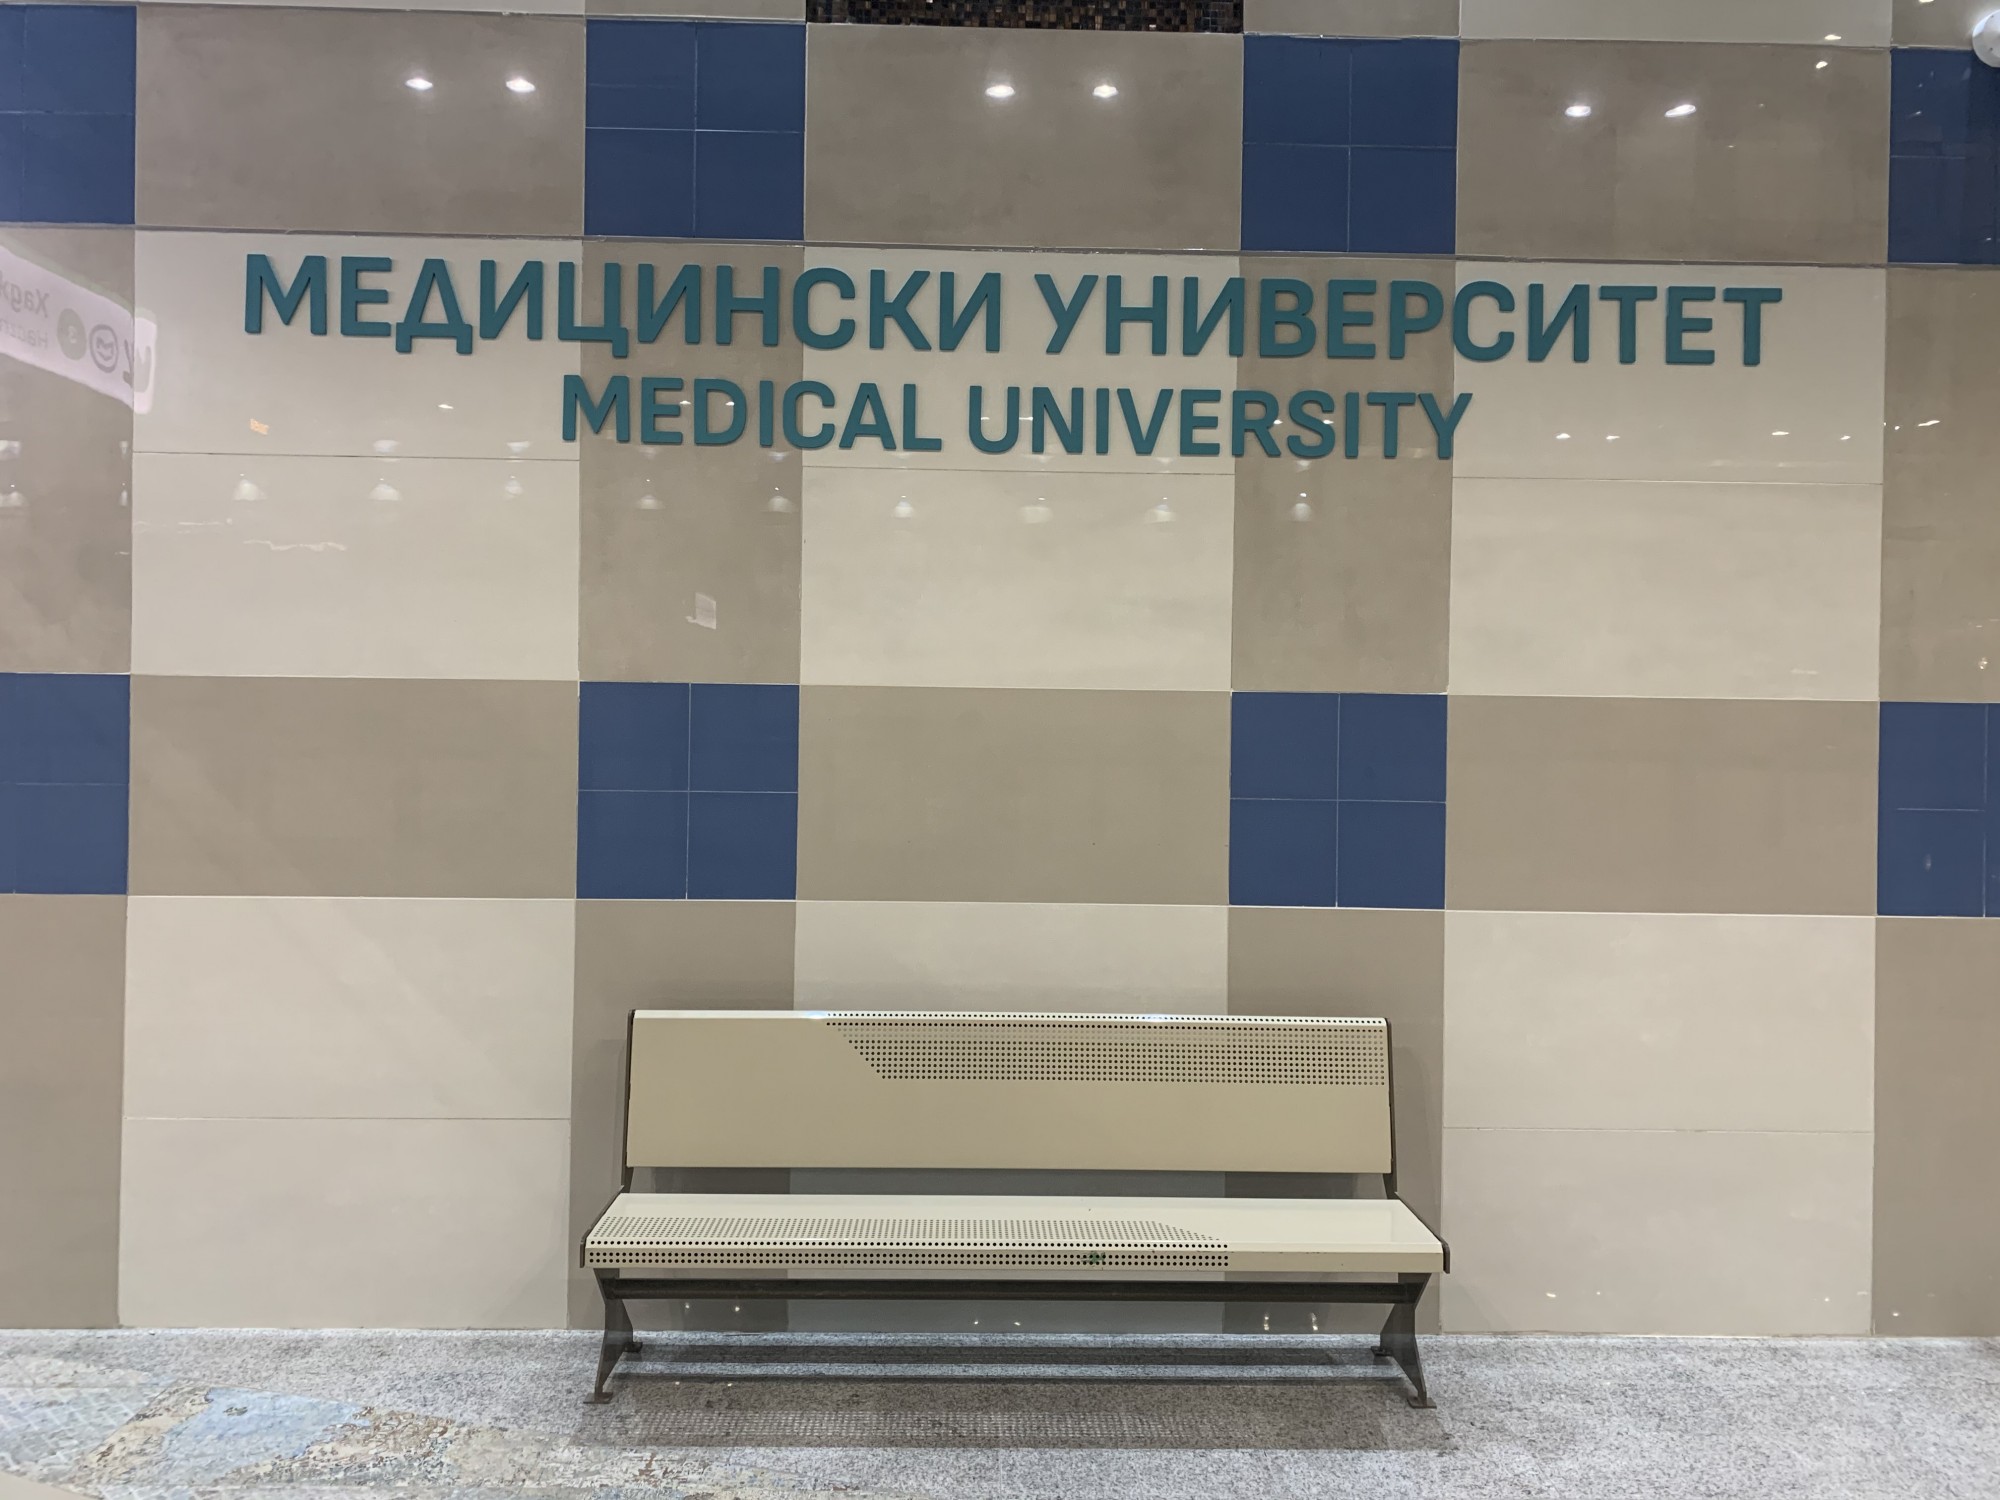 metro station "Medicinski universitet"